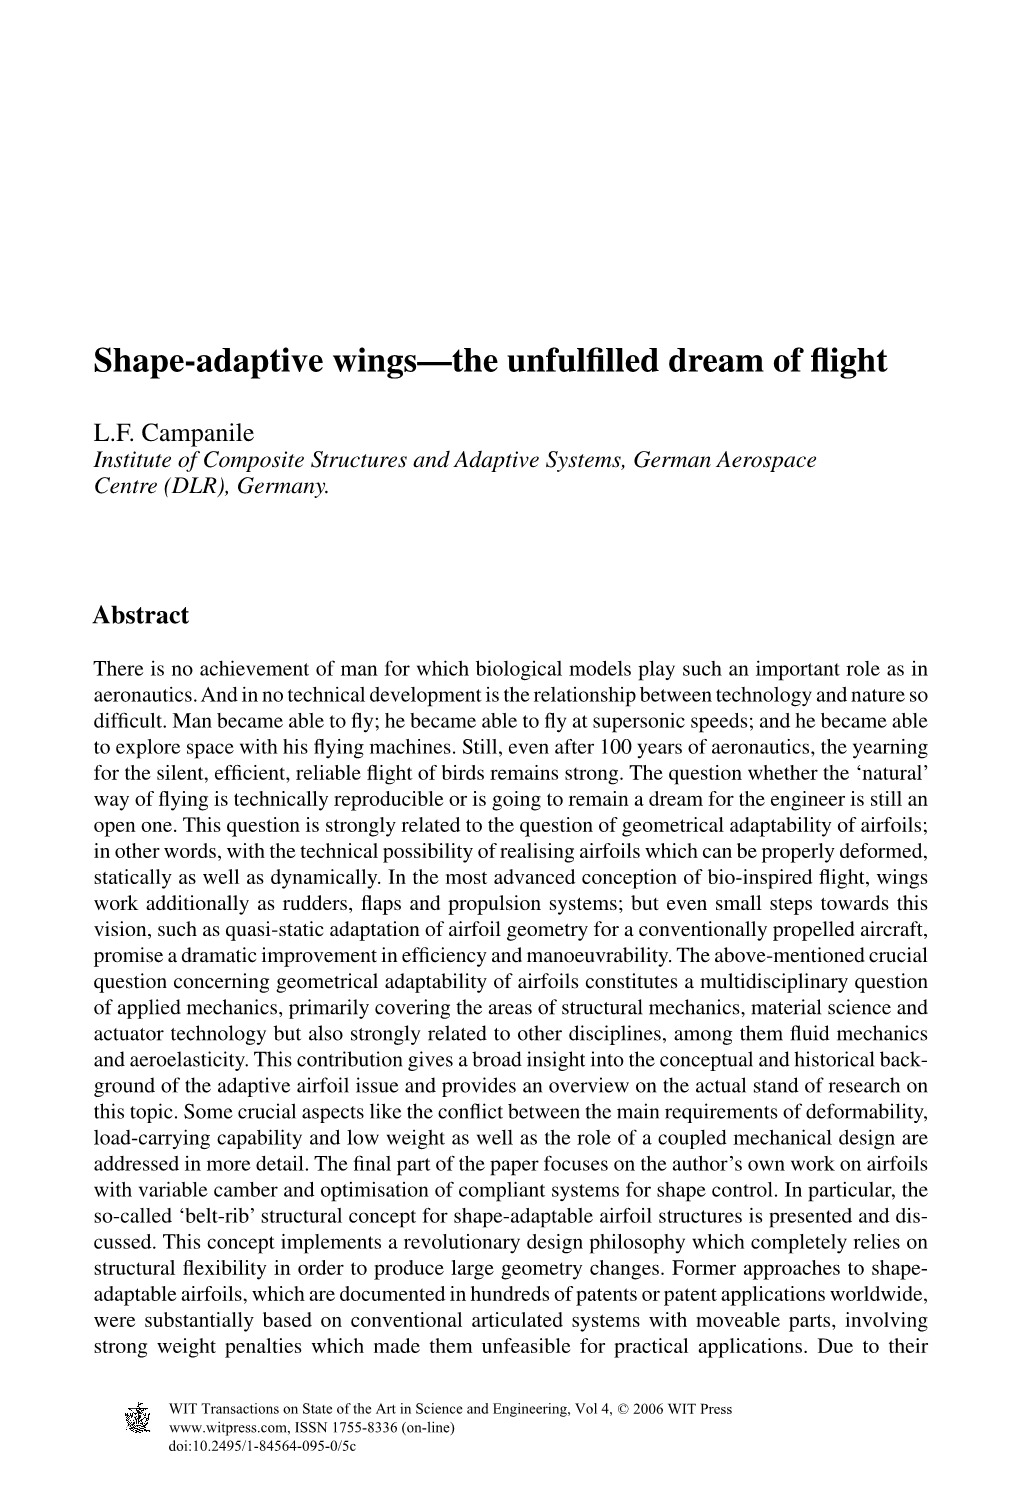 Shape-Adaptive Wings—The Unfulfilled Dream of Flight